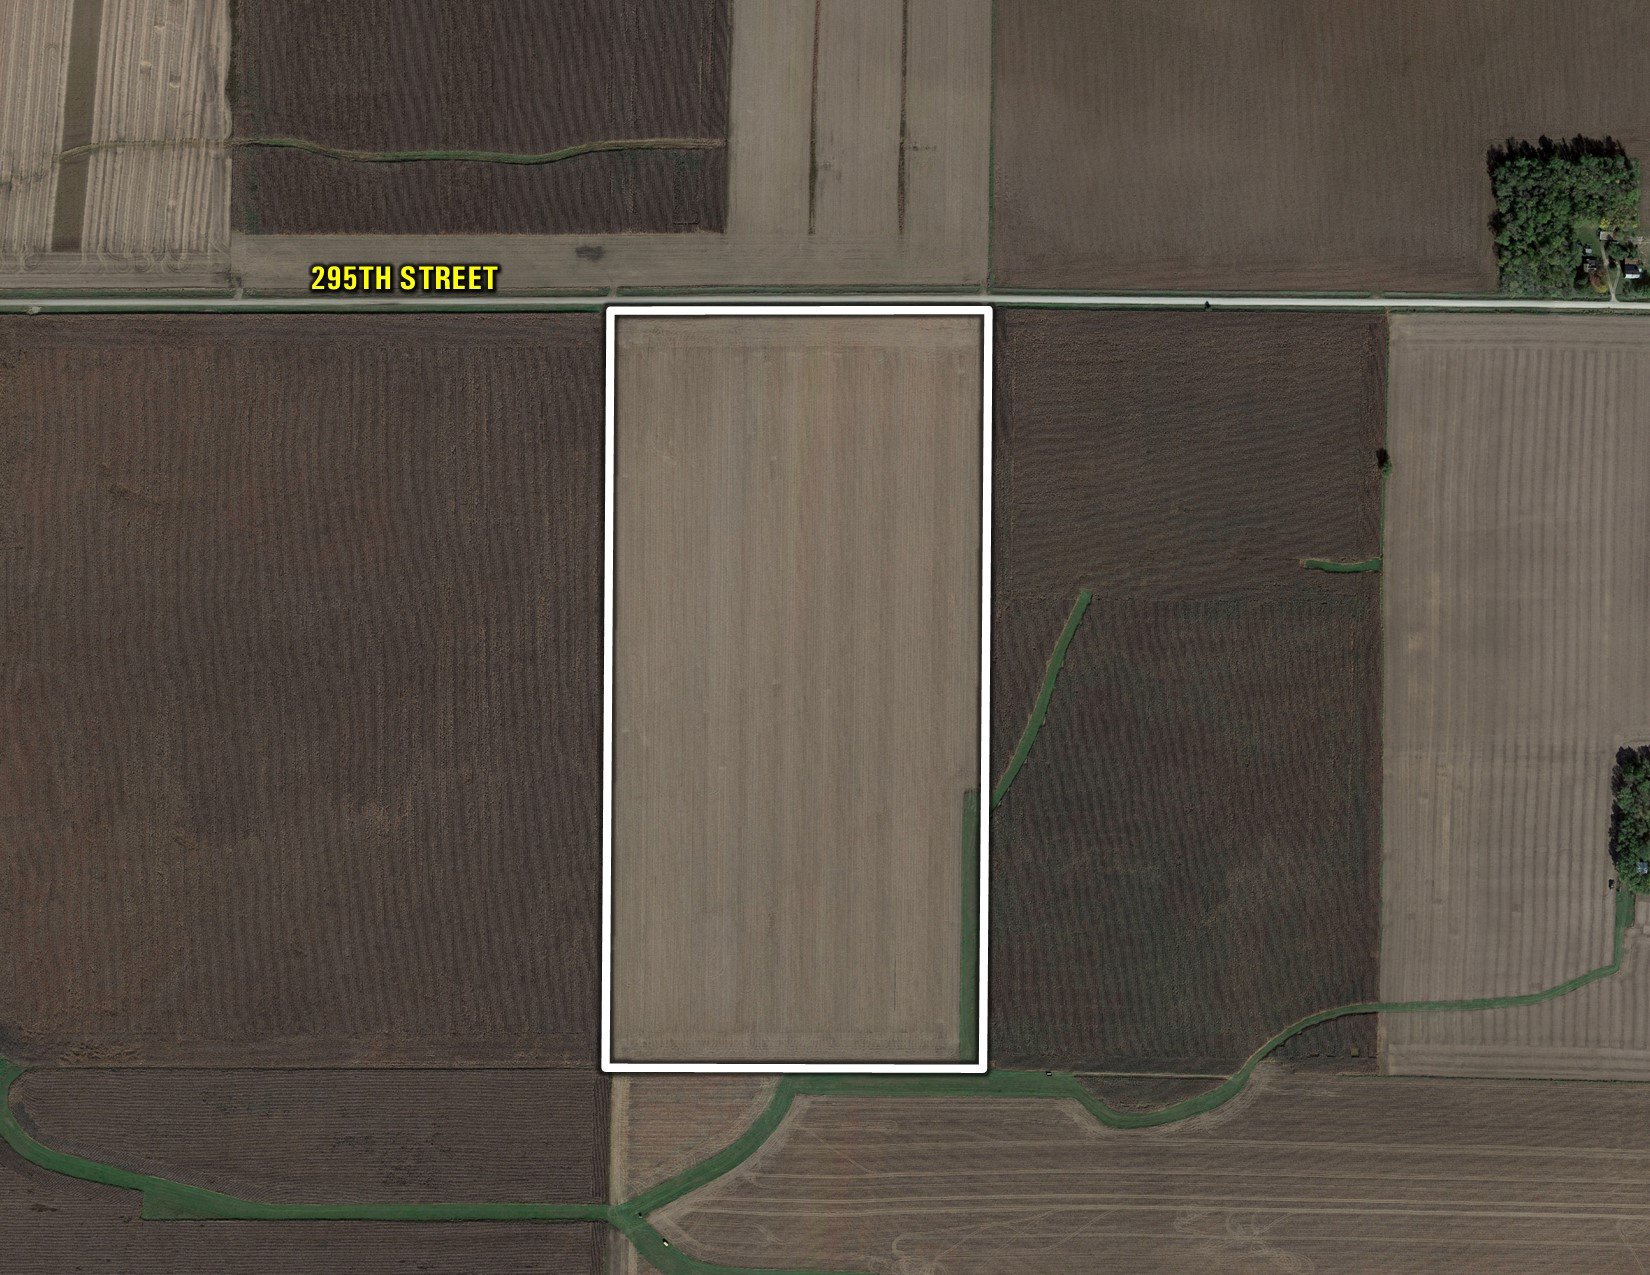 auctions-land-cerro-gordo-county-iowa-80-acres-listing-number-16967-Google Close -0.jpg